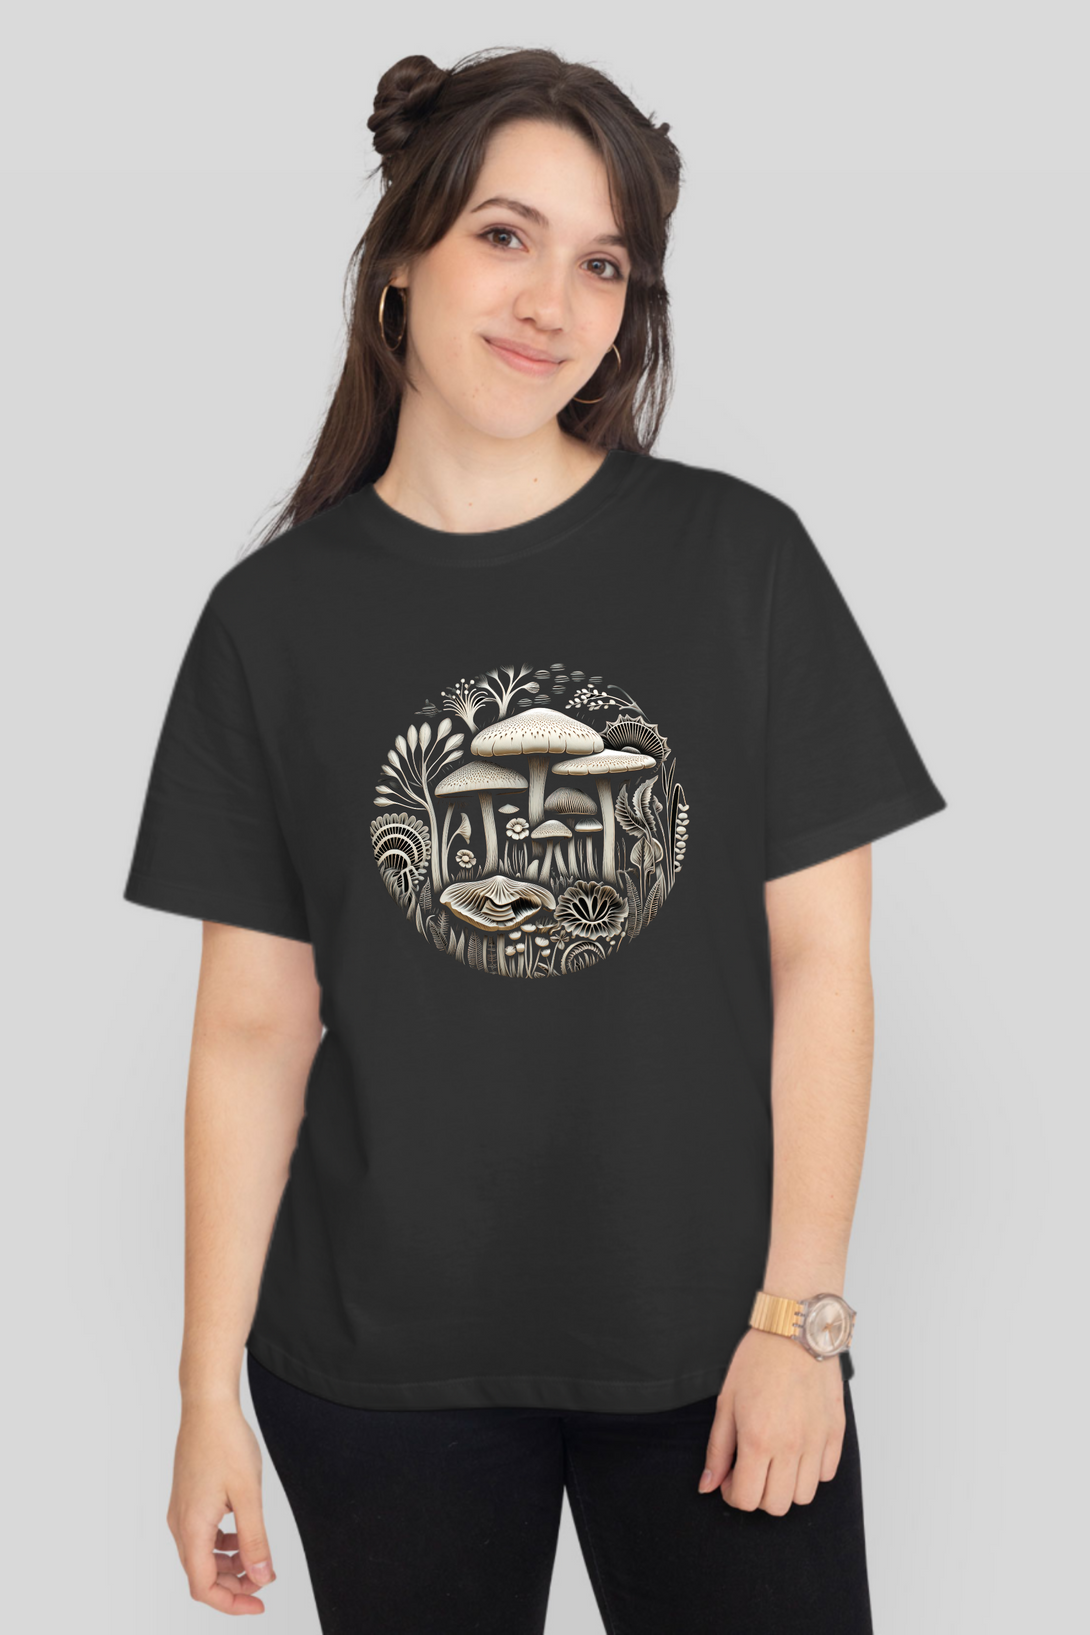 Mushroom Art Printed T-Shirt For Women - WowWaves - 9